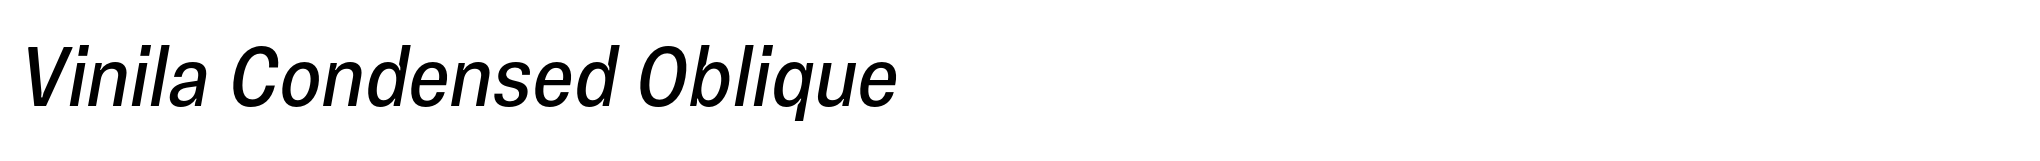 Vinila Condensed Oblique image